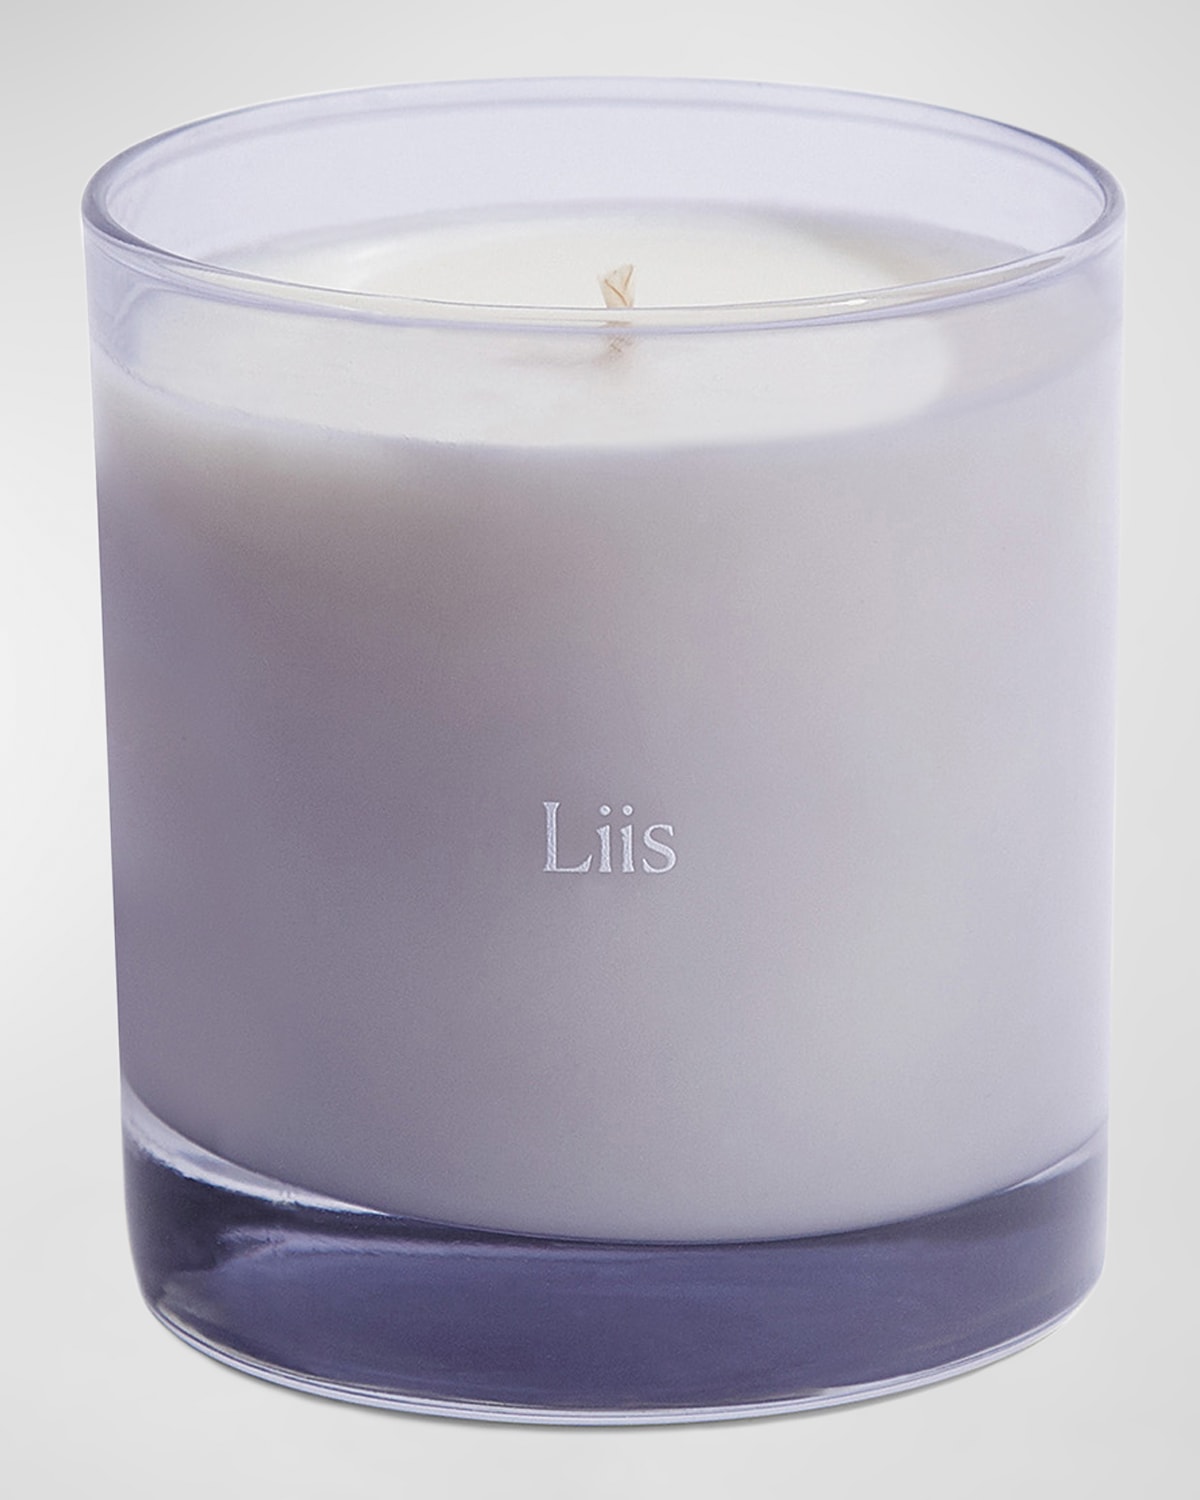 Liis Reyes Perfumed Candle, 8 Oz.